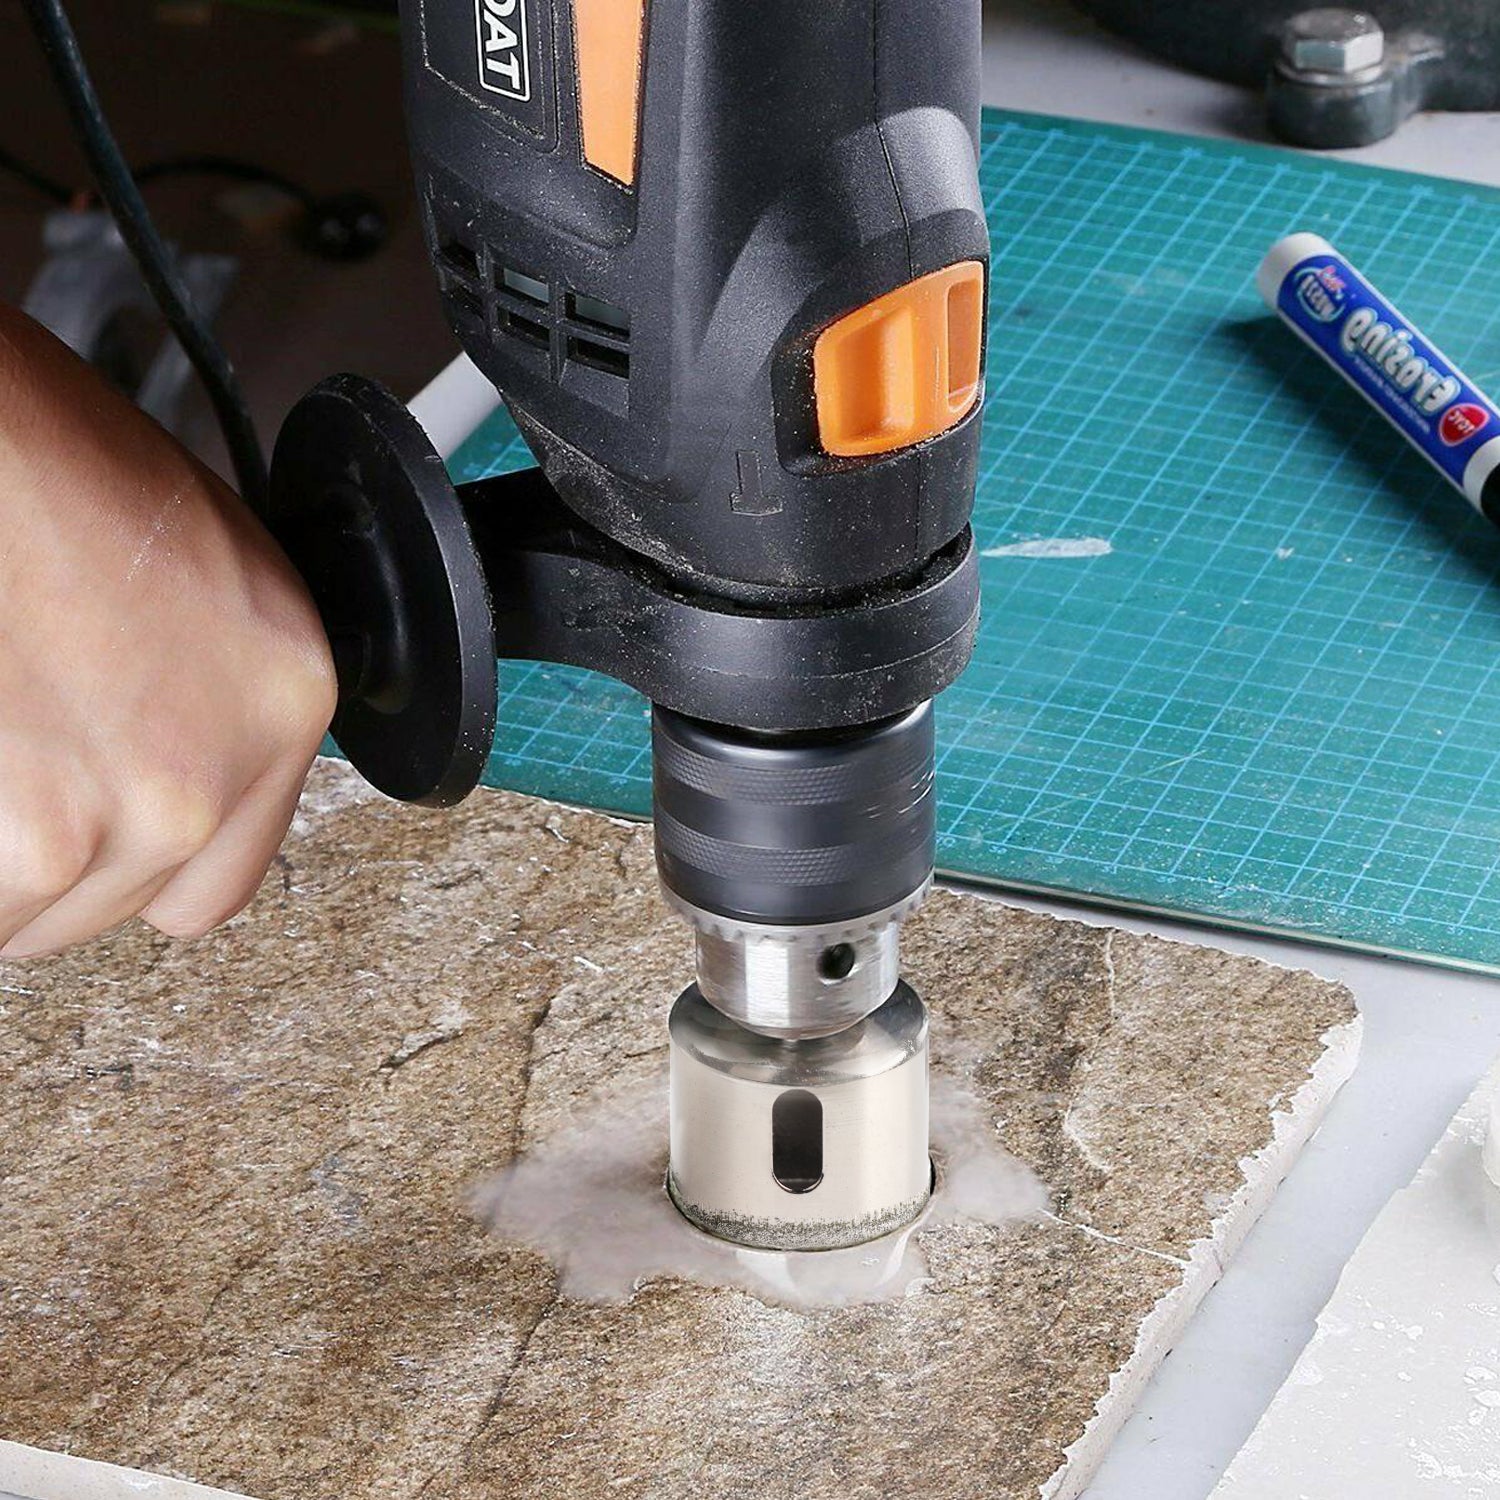 10mm Diamond Hole Saw Kit Tile Drill Bits for Ceramic, Glass, Tile, Porcelain, Marble, Granite